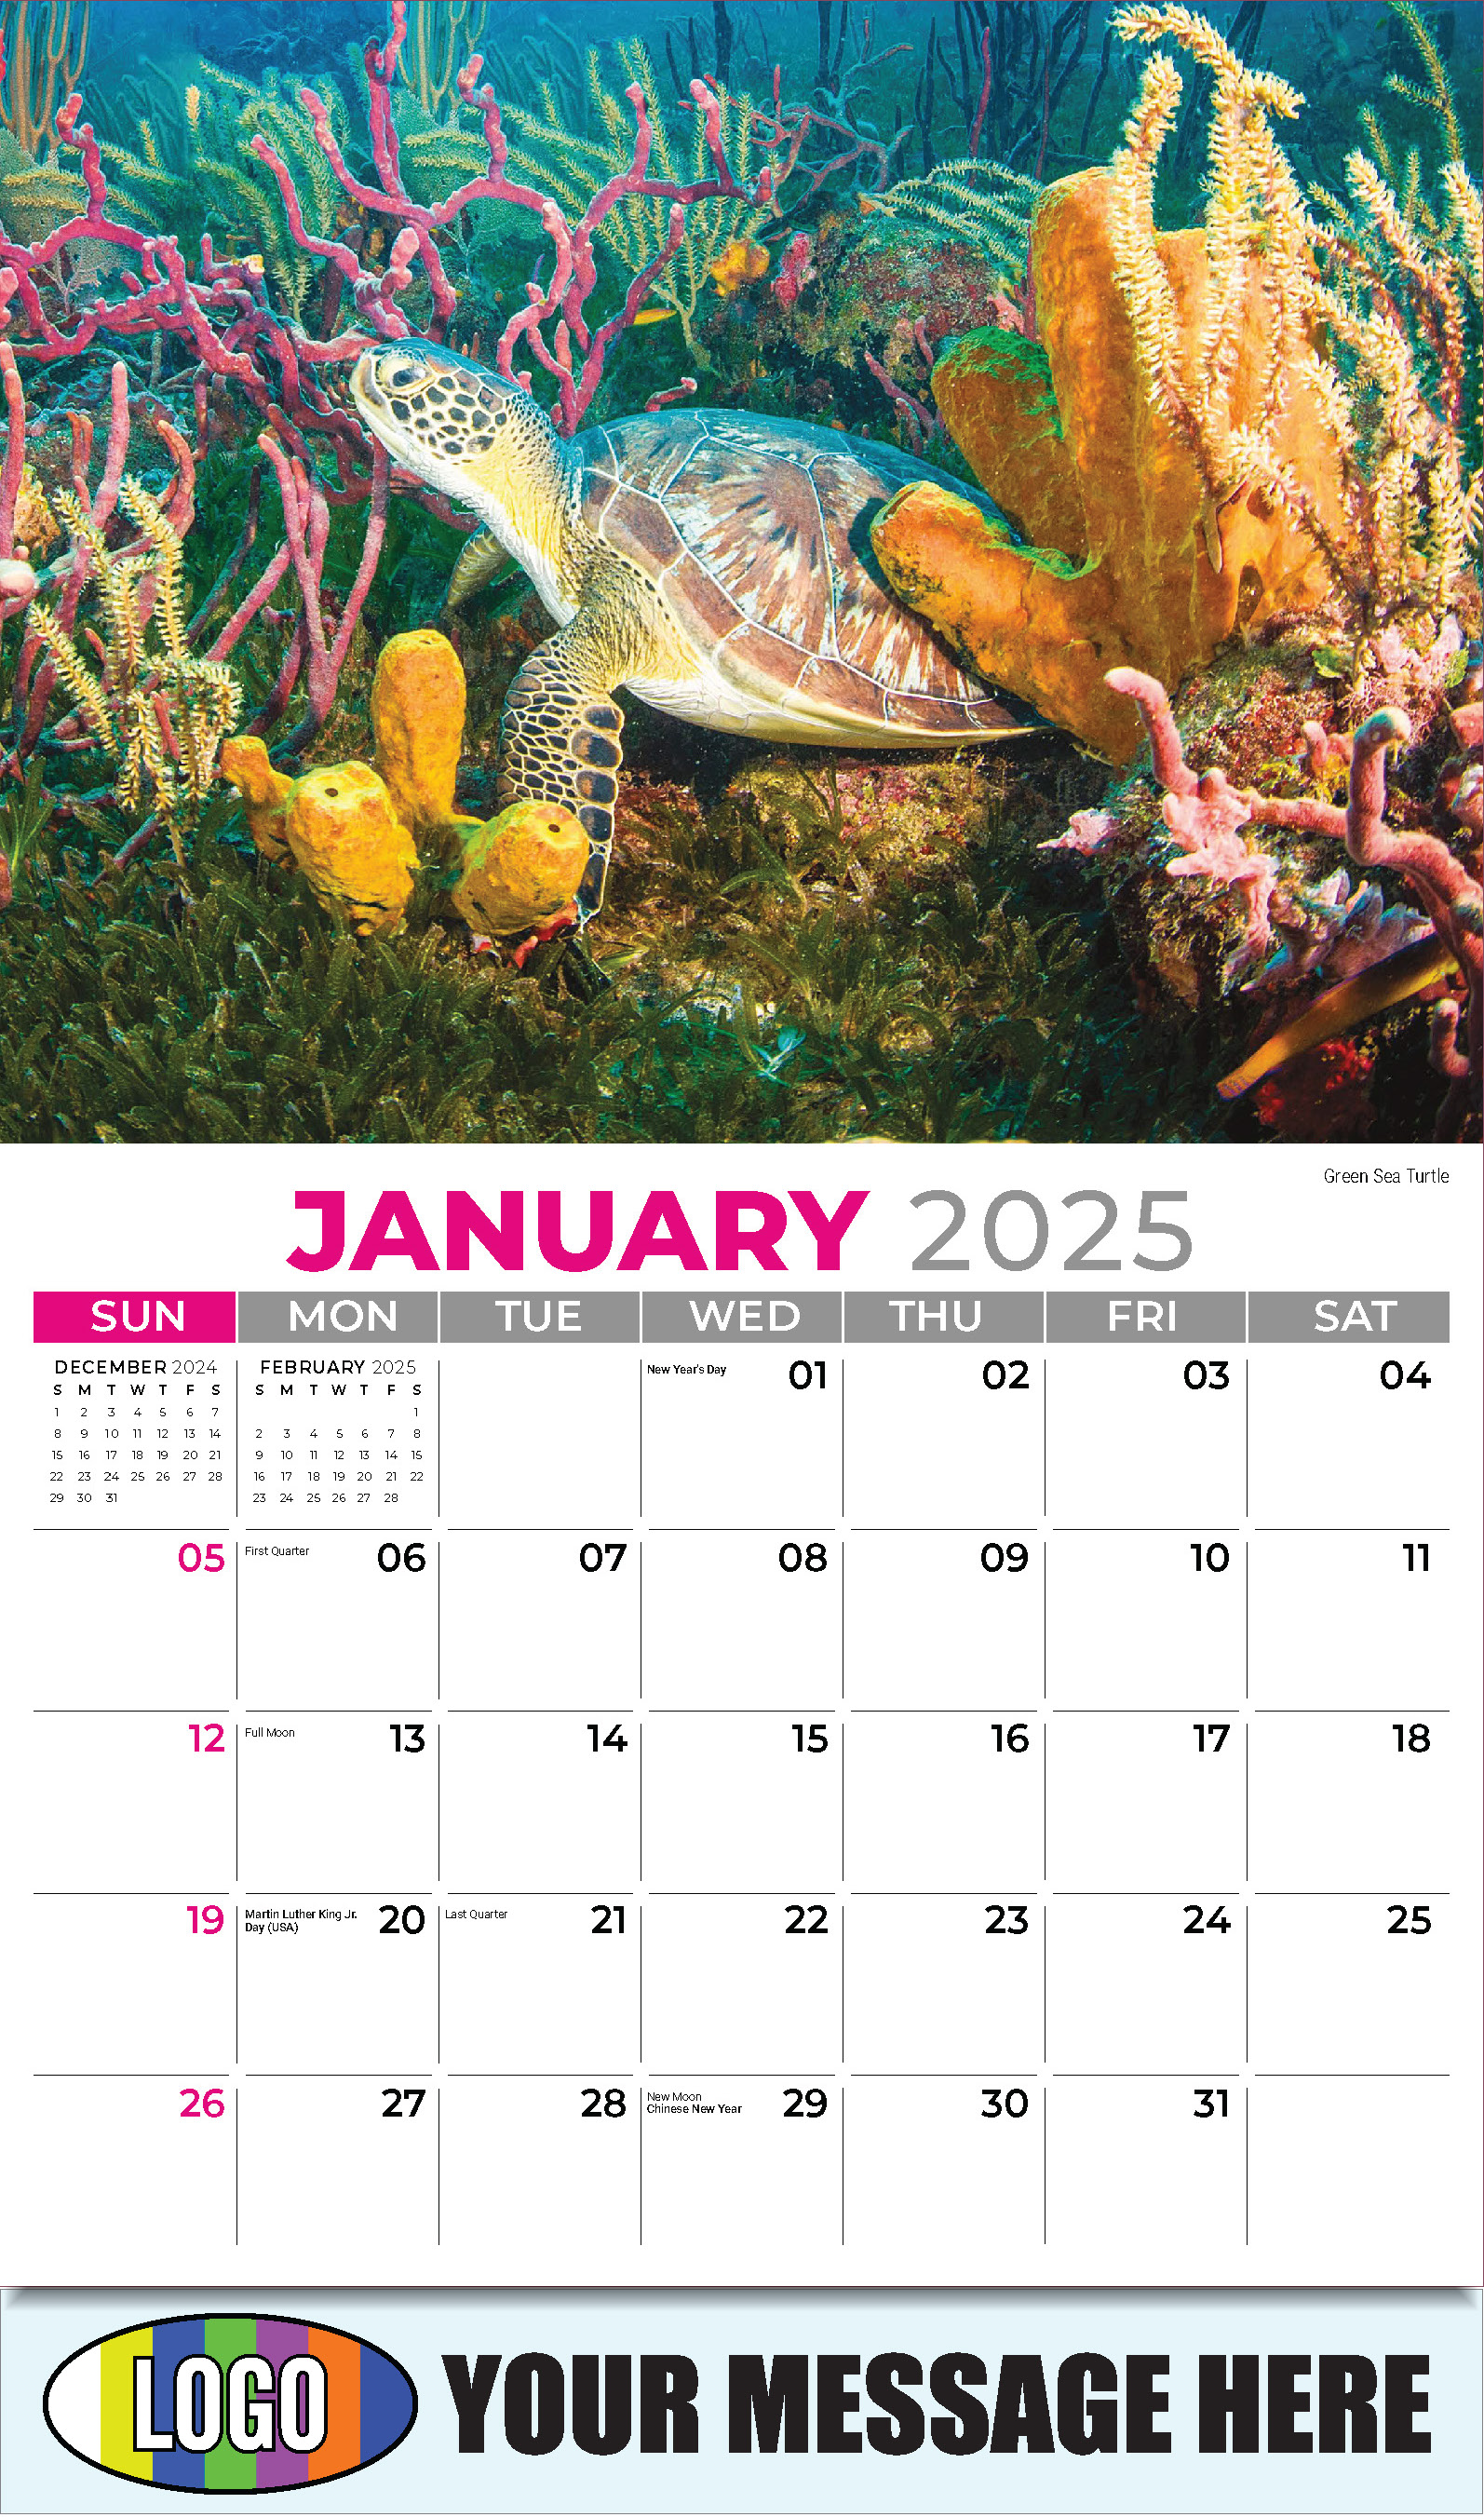 International Wildlife 2025 Business Advertising Wall Calendar - January